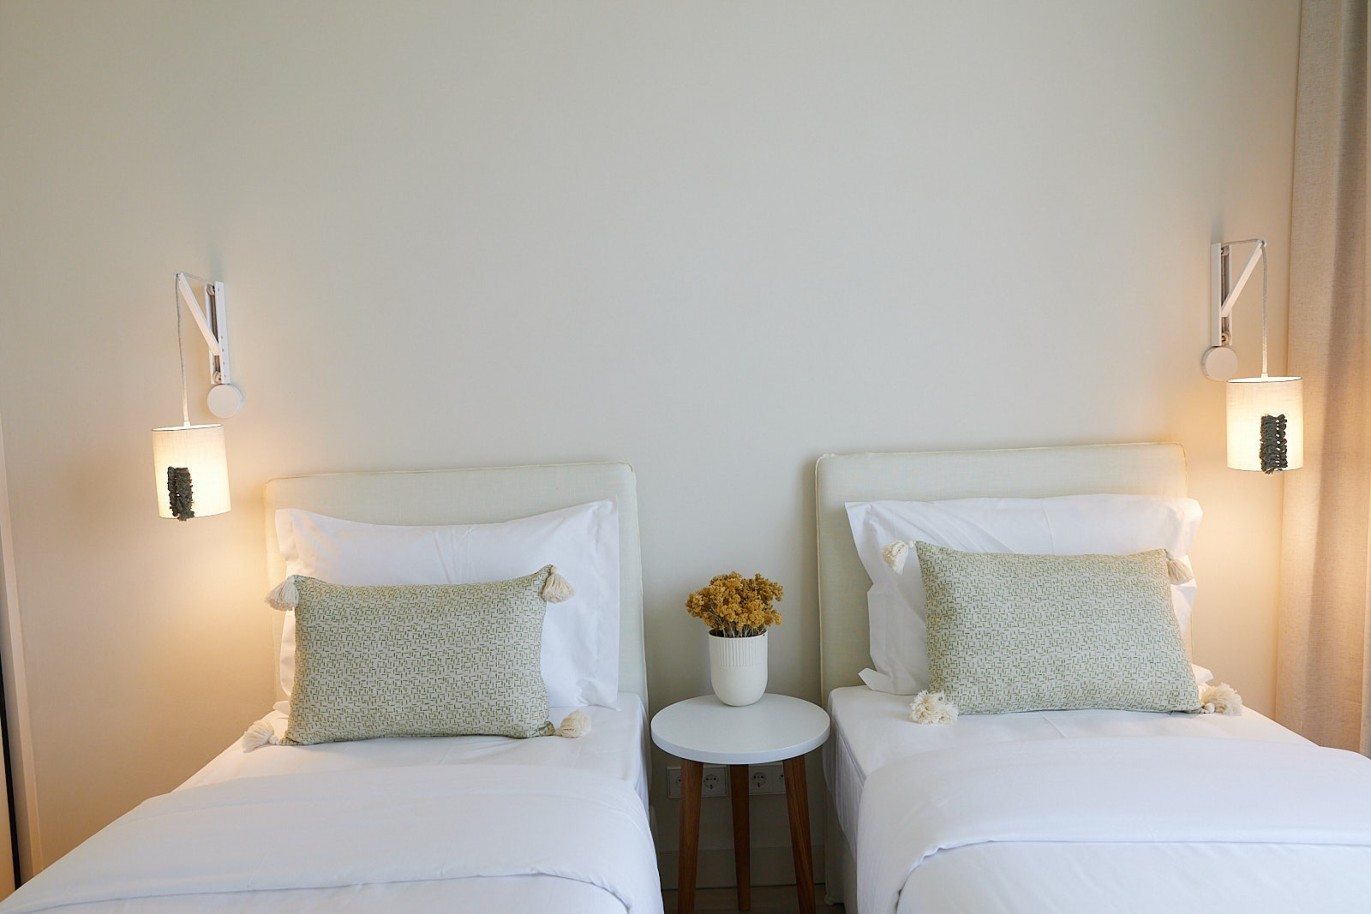 3 bedroom apartment in resort, for sale in Porches, Algarve_228613